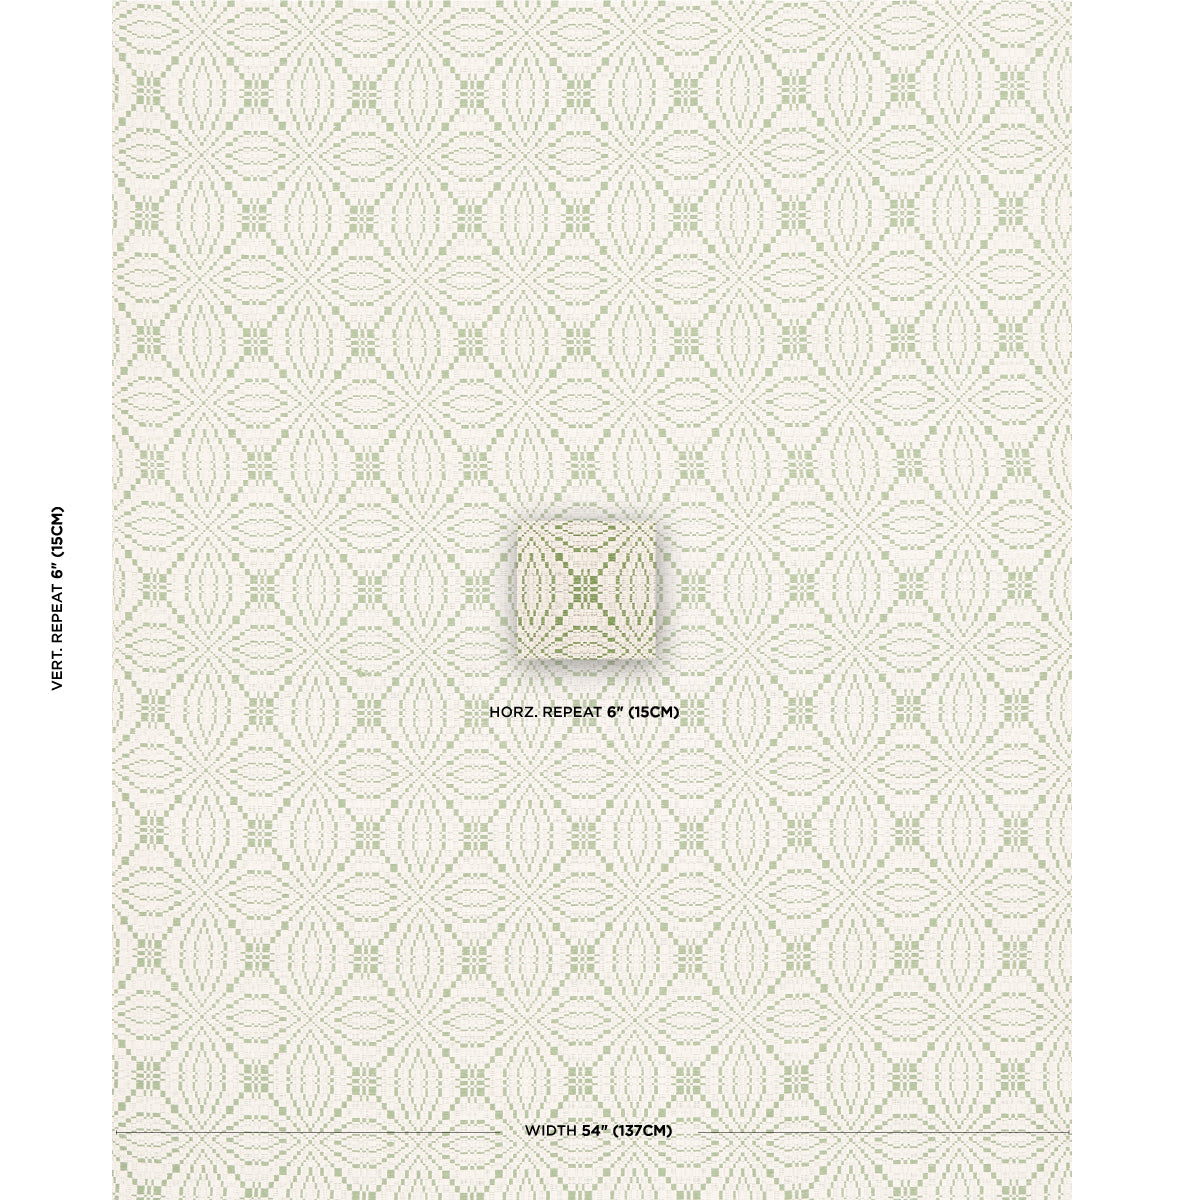 Purchase 82910 | Bouquet Toss, Leaf - Schumacher Fabric